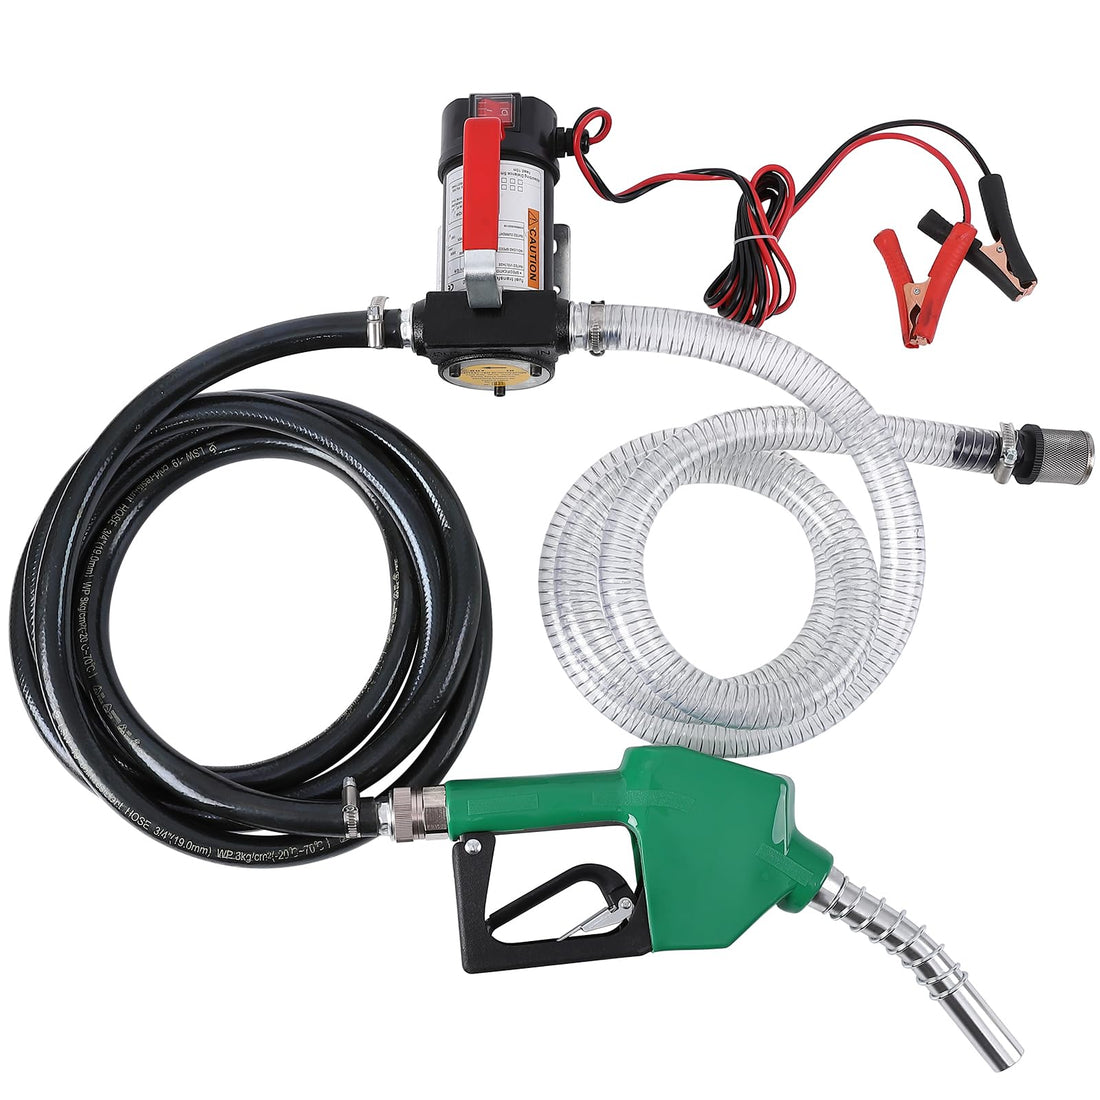 12V DC Electric Fuel Transfer Pump Kit,10GPM/40LPM,Self-Priming